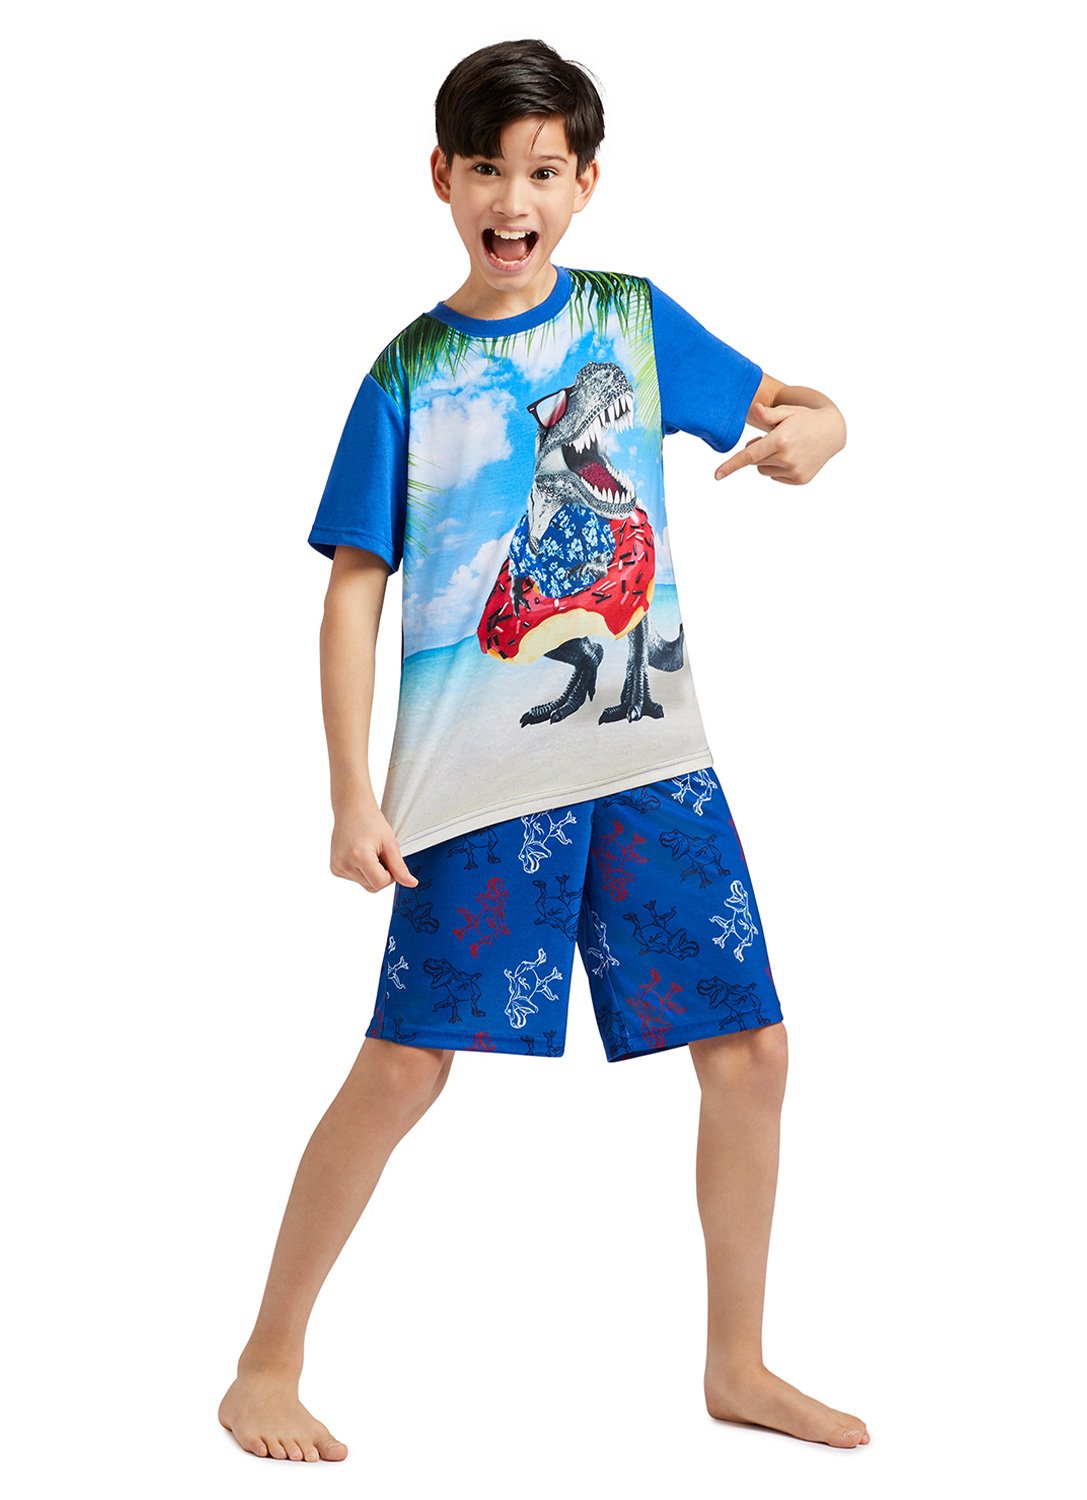 Happy Boy with Print T-Shirt Dino wearing donut & Dino print Shorts